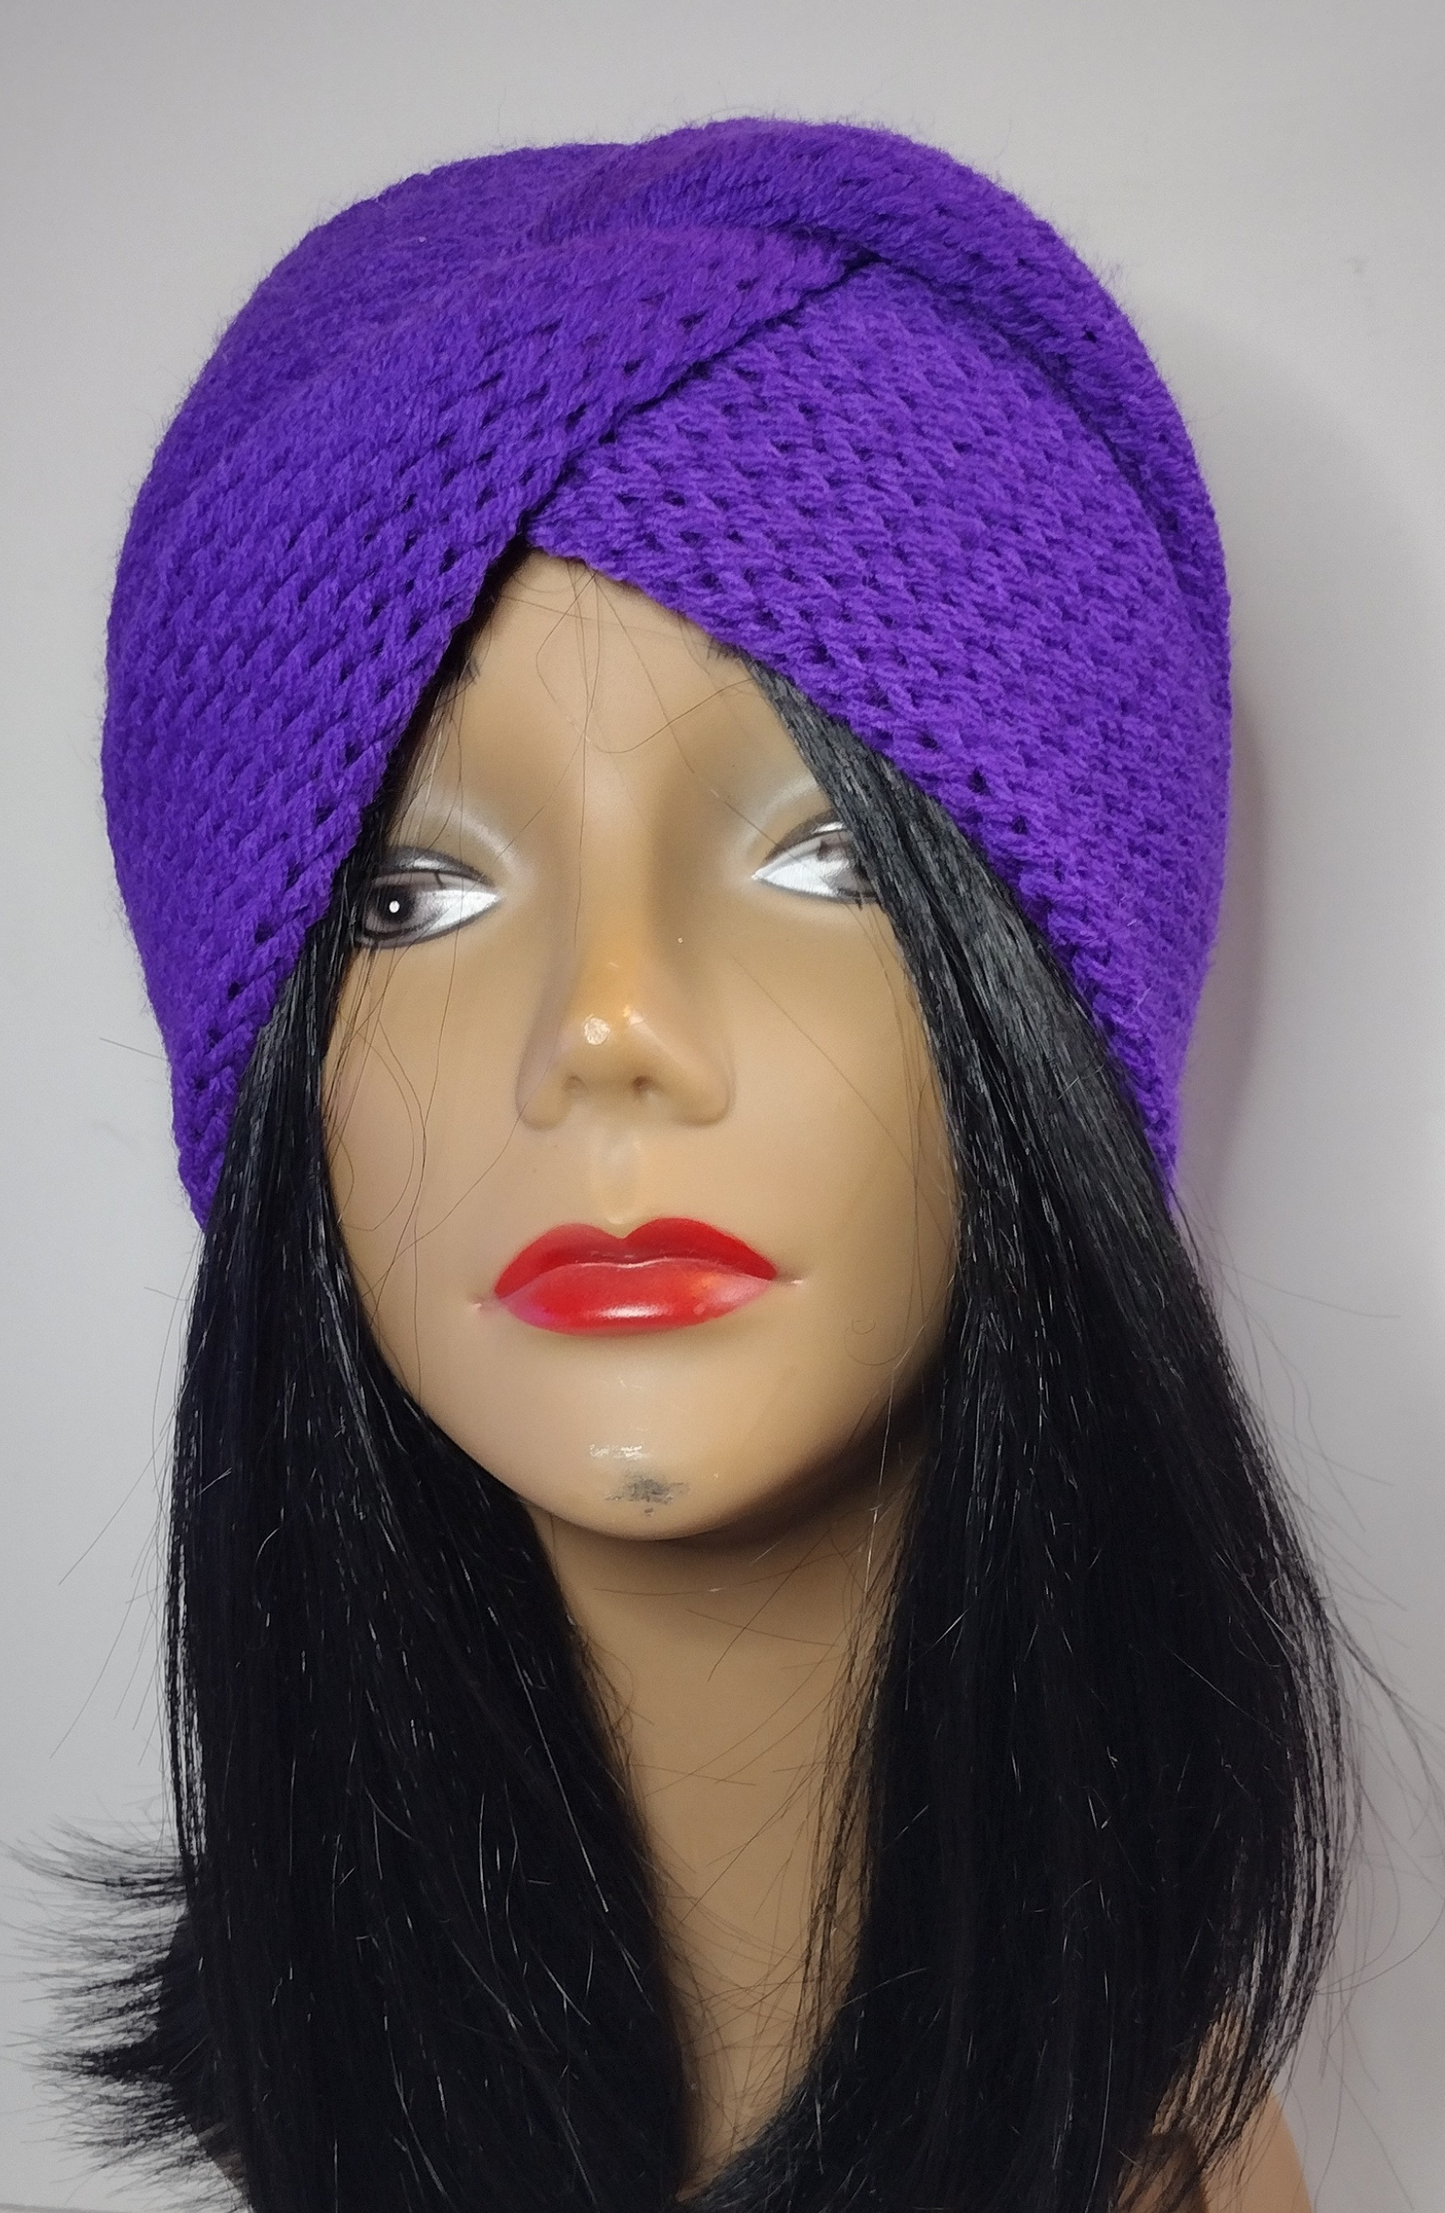 Blk Lotus Co Purple Twist Knit Headband: Winter Fashion and Comfort